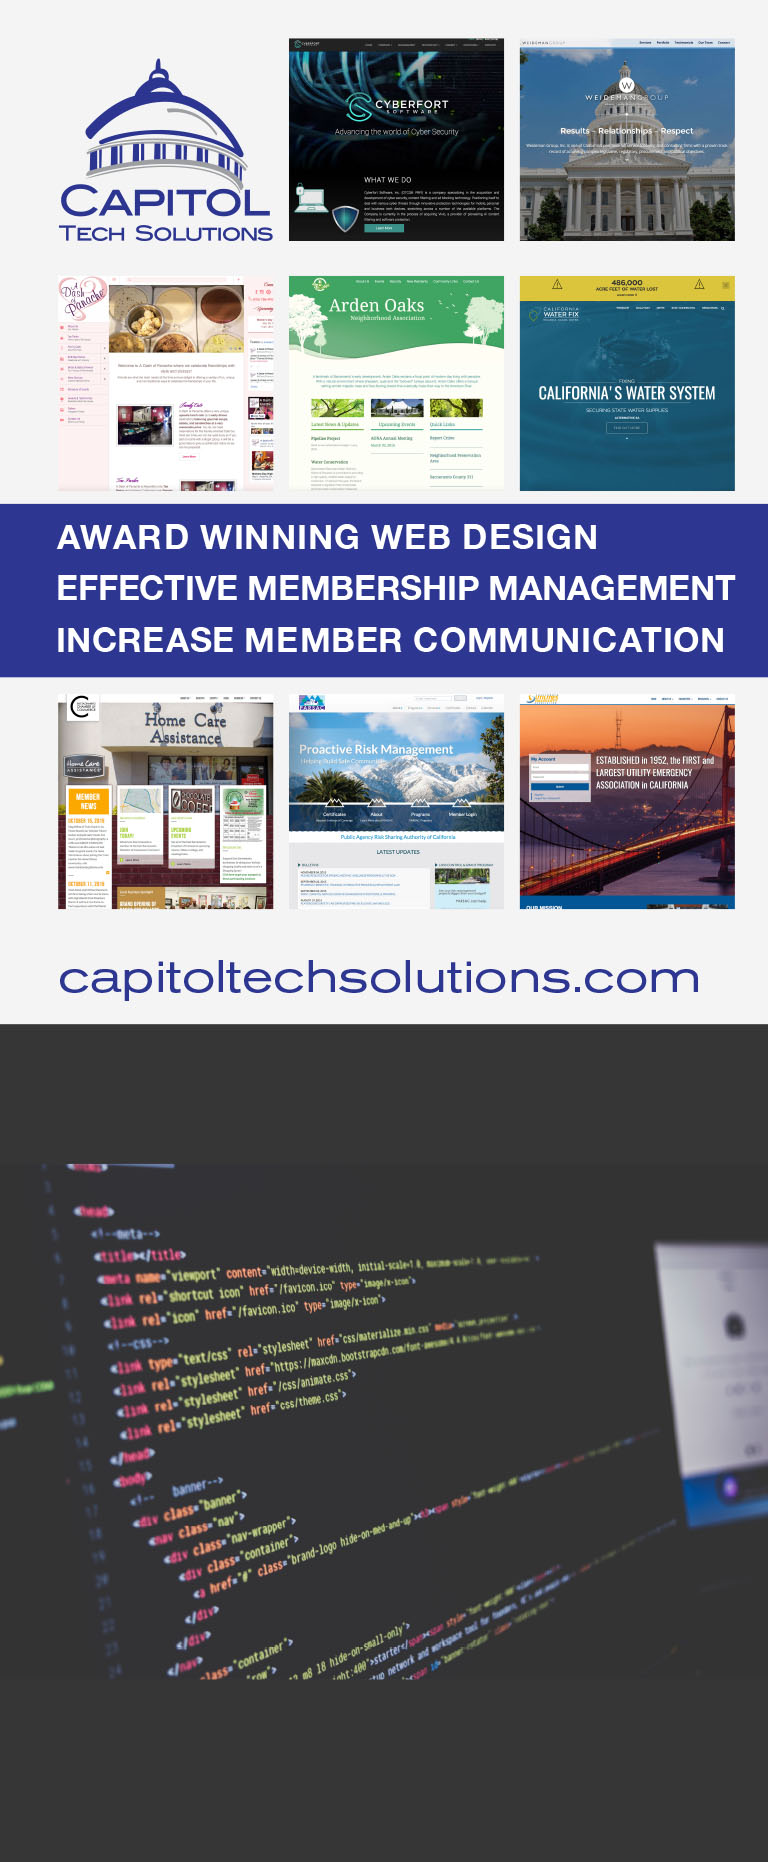 Capitol Tech Solutions Web Design Banner